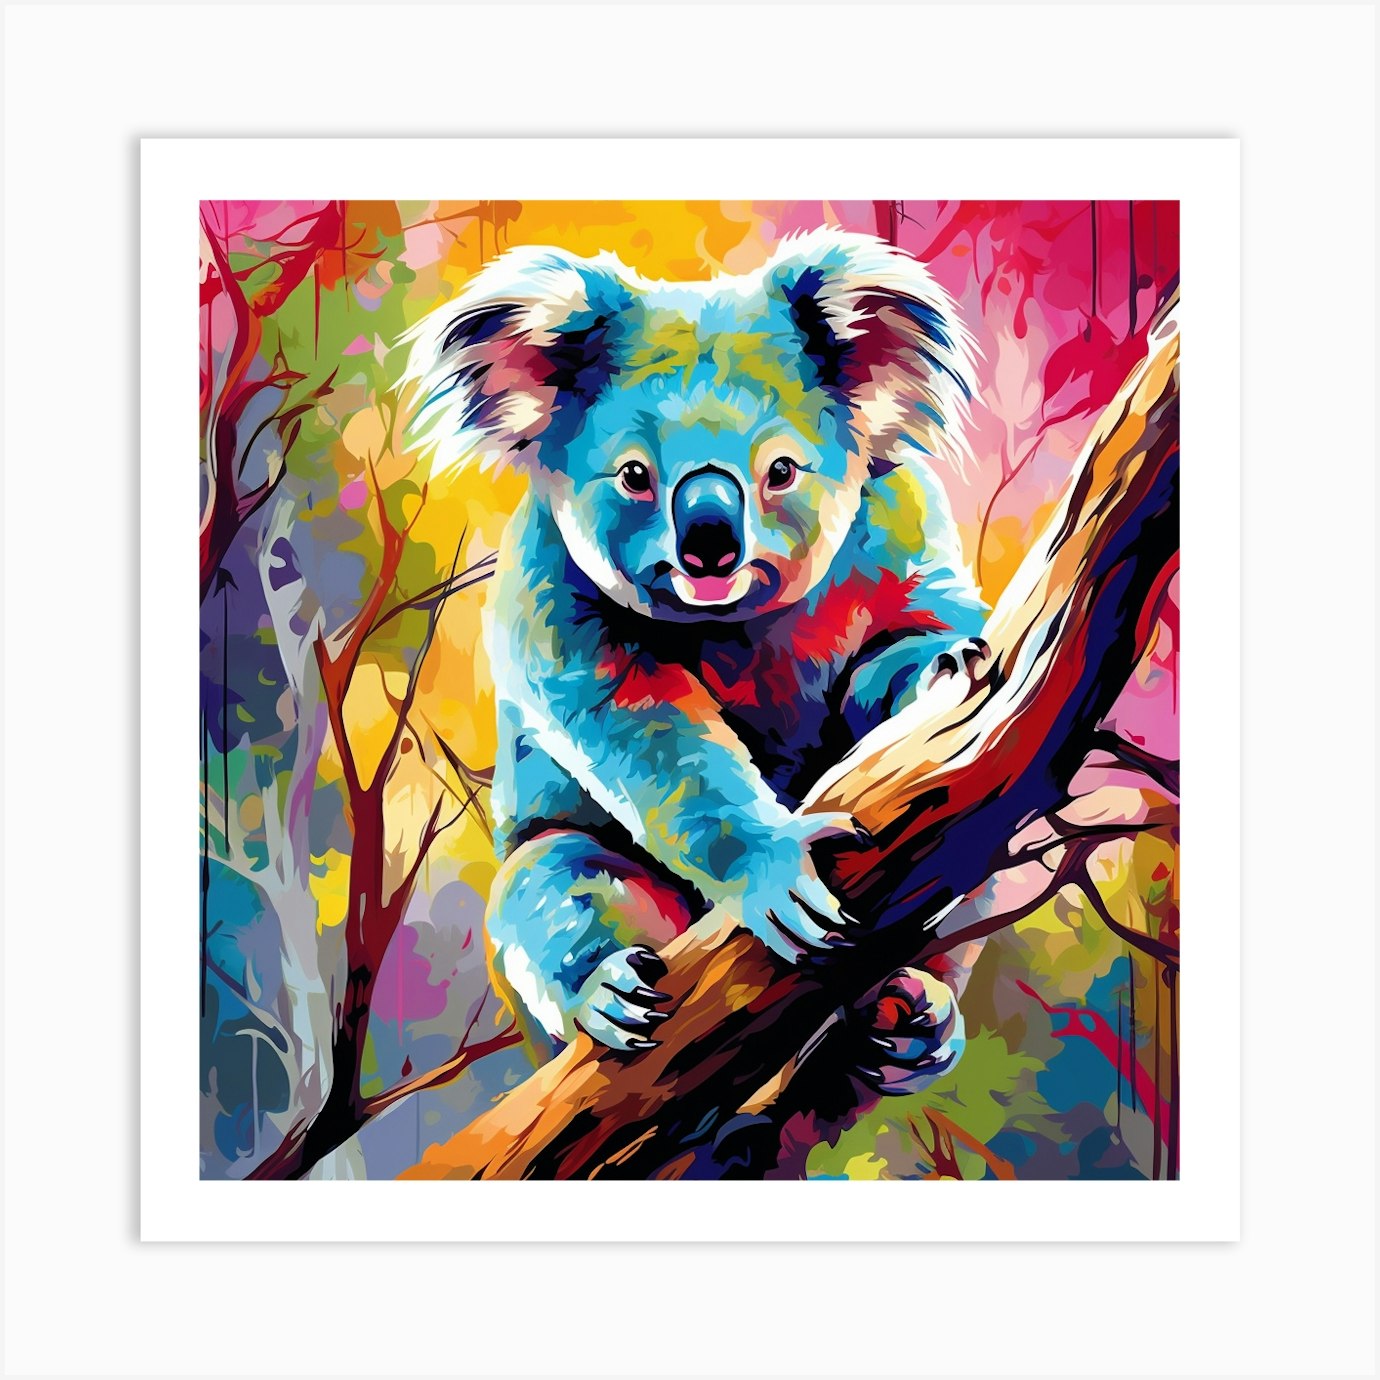 Koala Painting 1 Art Print